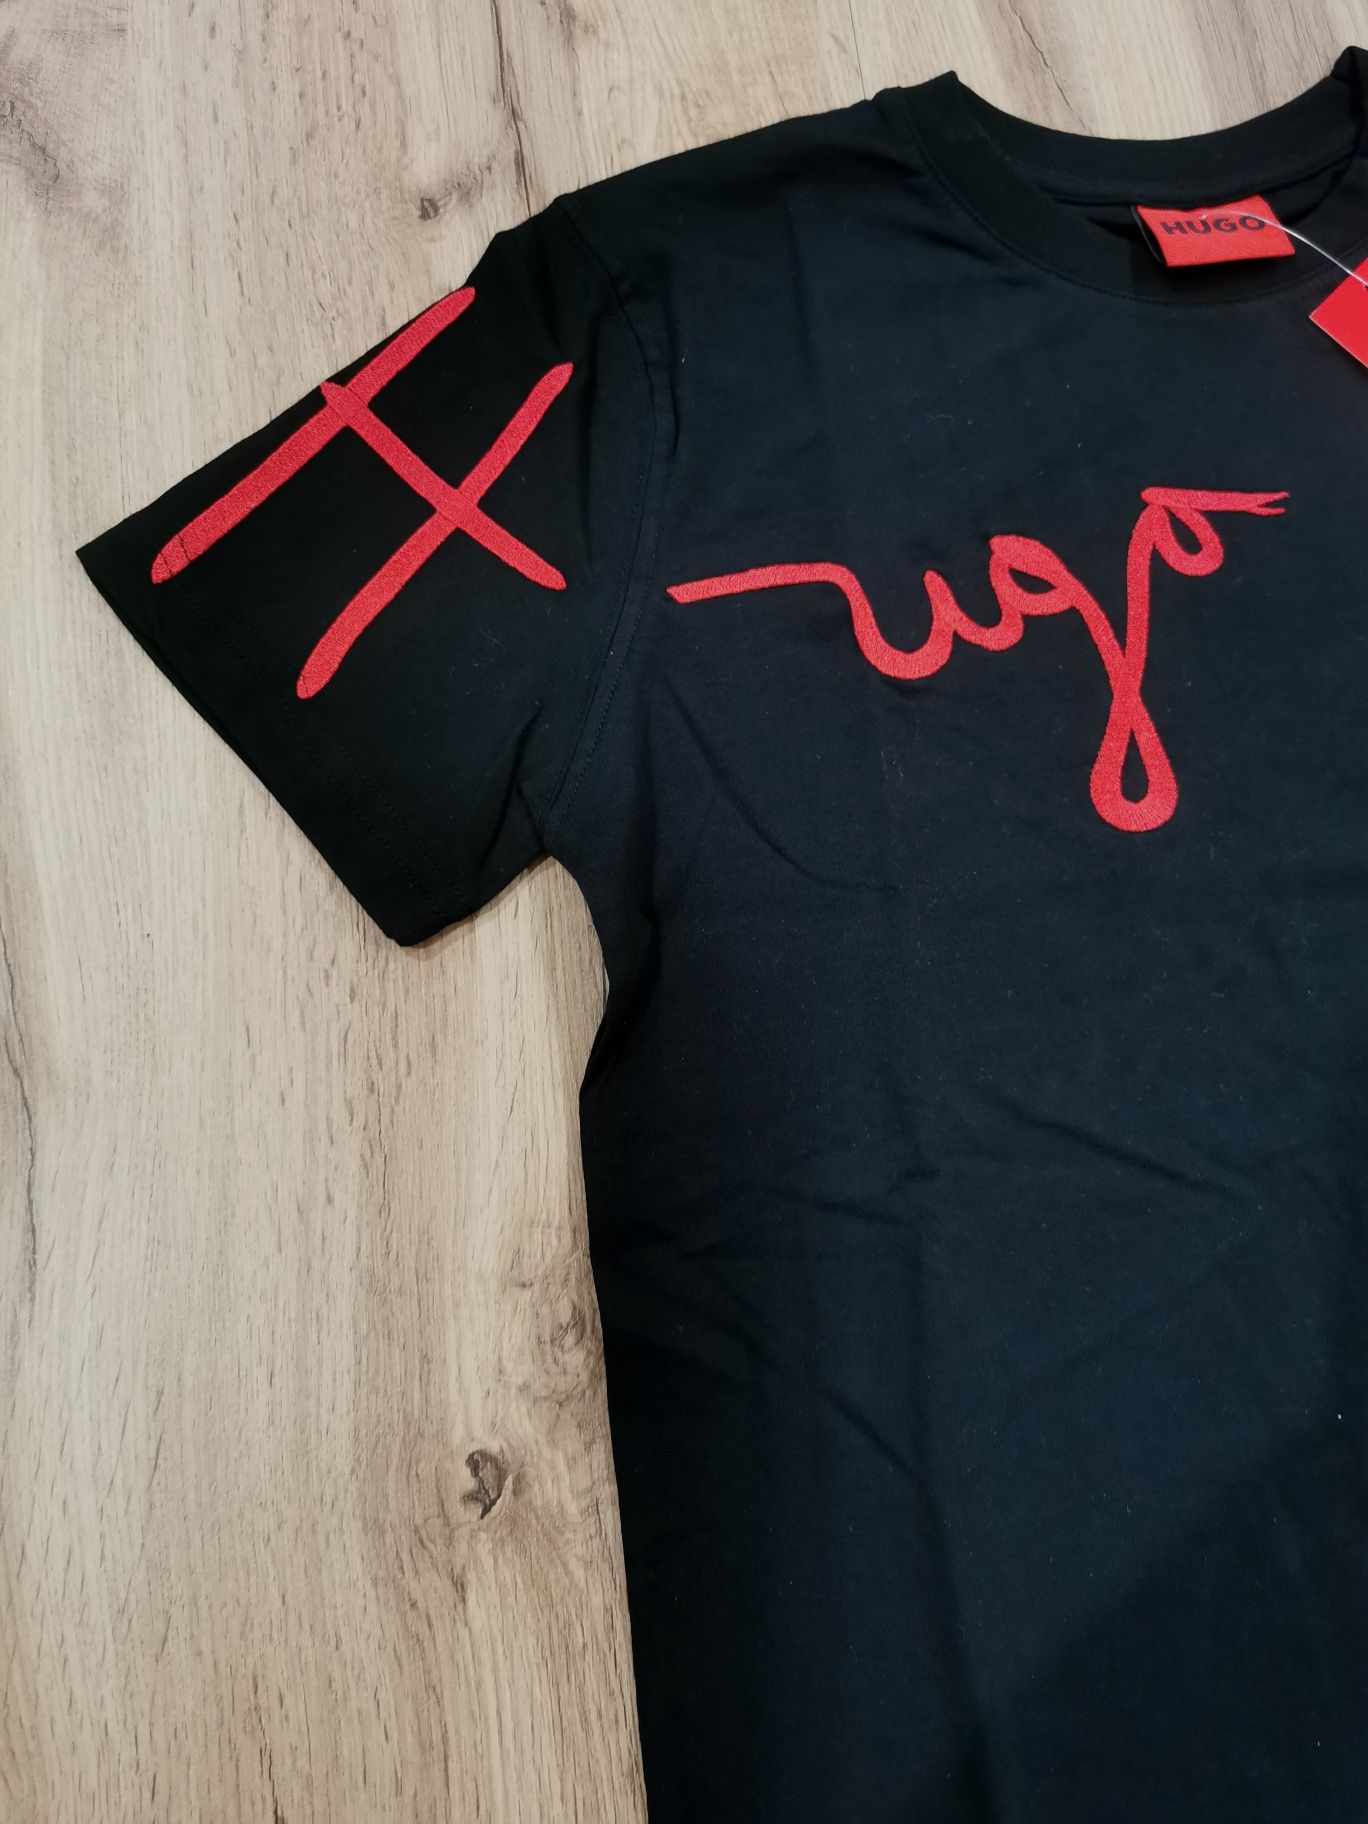 Koszulka bluzka t-shirt męska Hugo Boss r. S/M